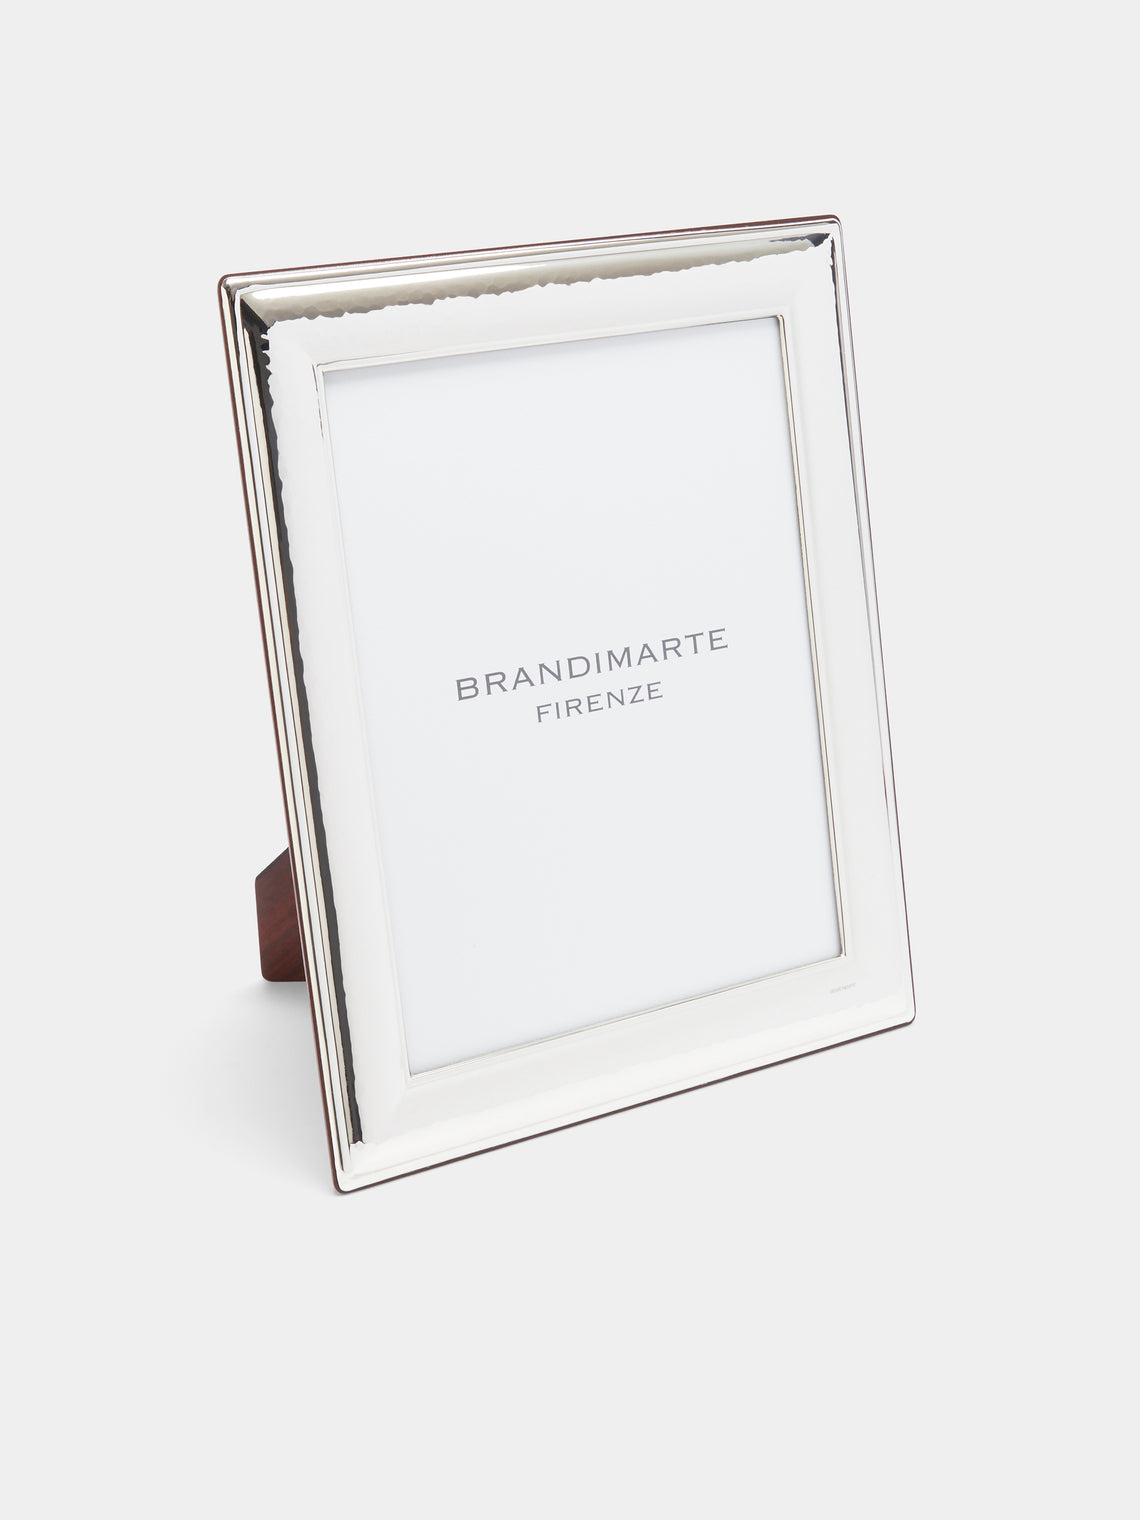 Brandimarte - Germana Sterling Silver Photo Frame - Silver - ABASK - 